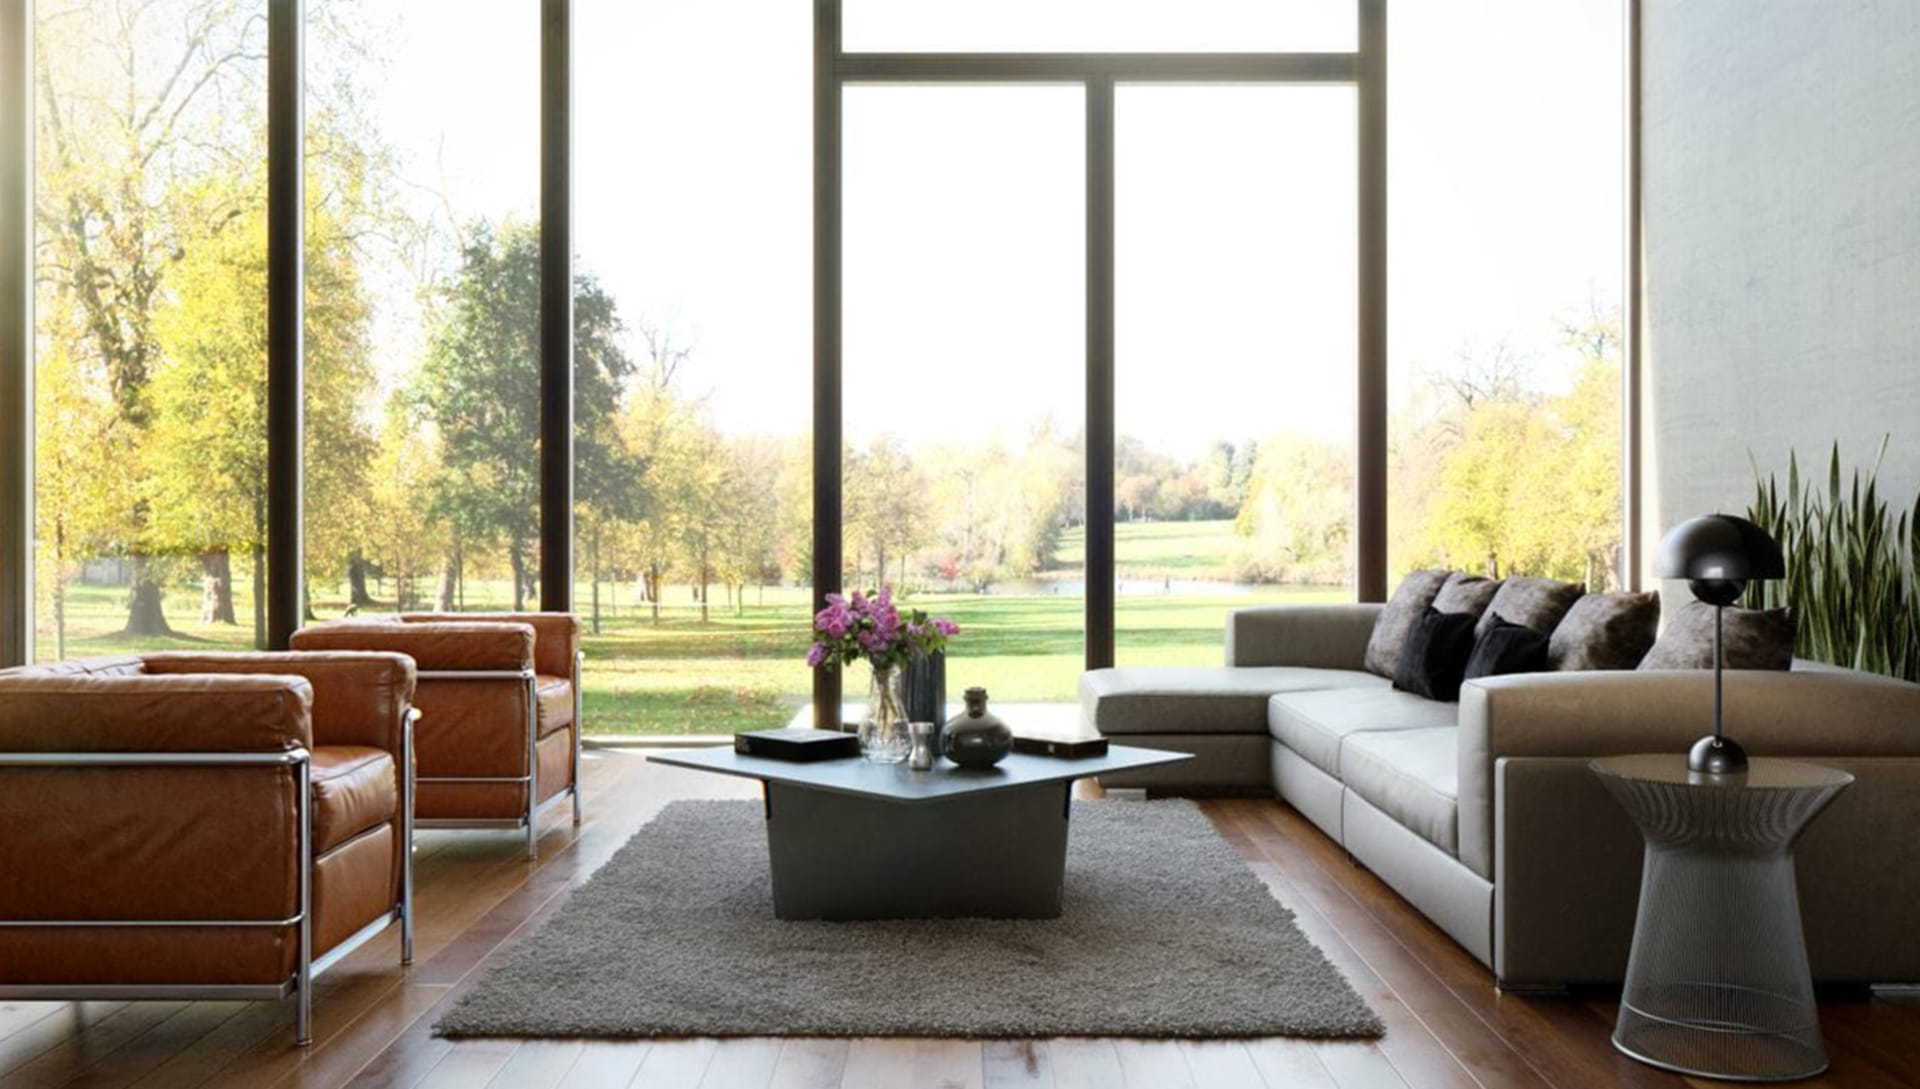 bendus-mihail-living-room-interior-design-vray-3ds-max-02-1410x800.jpg